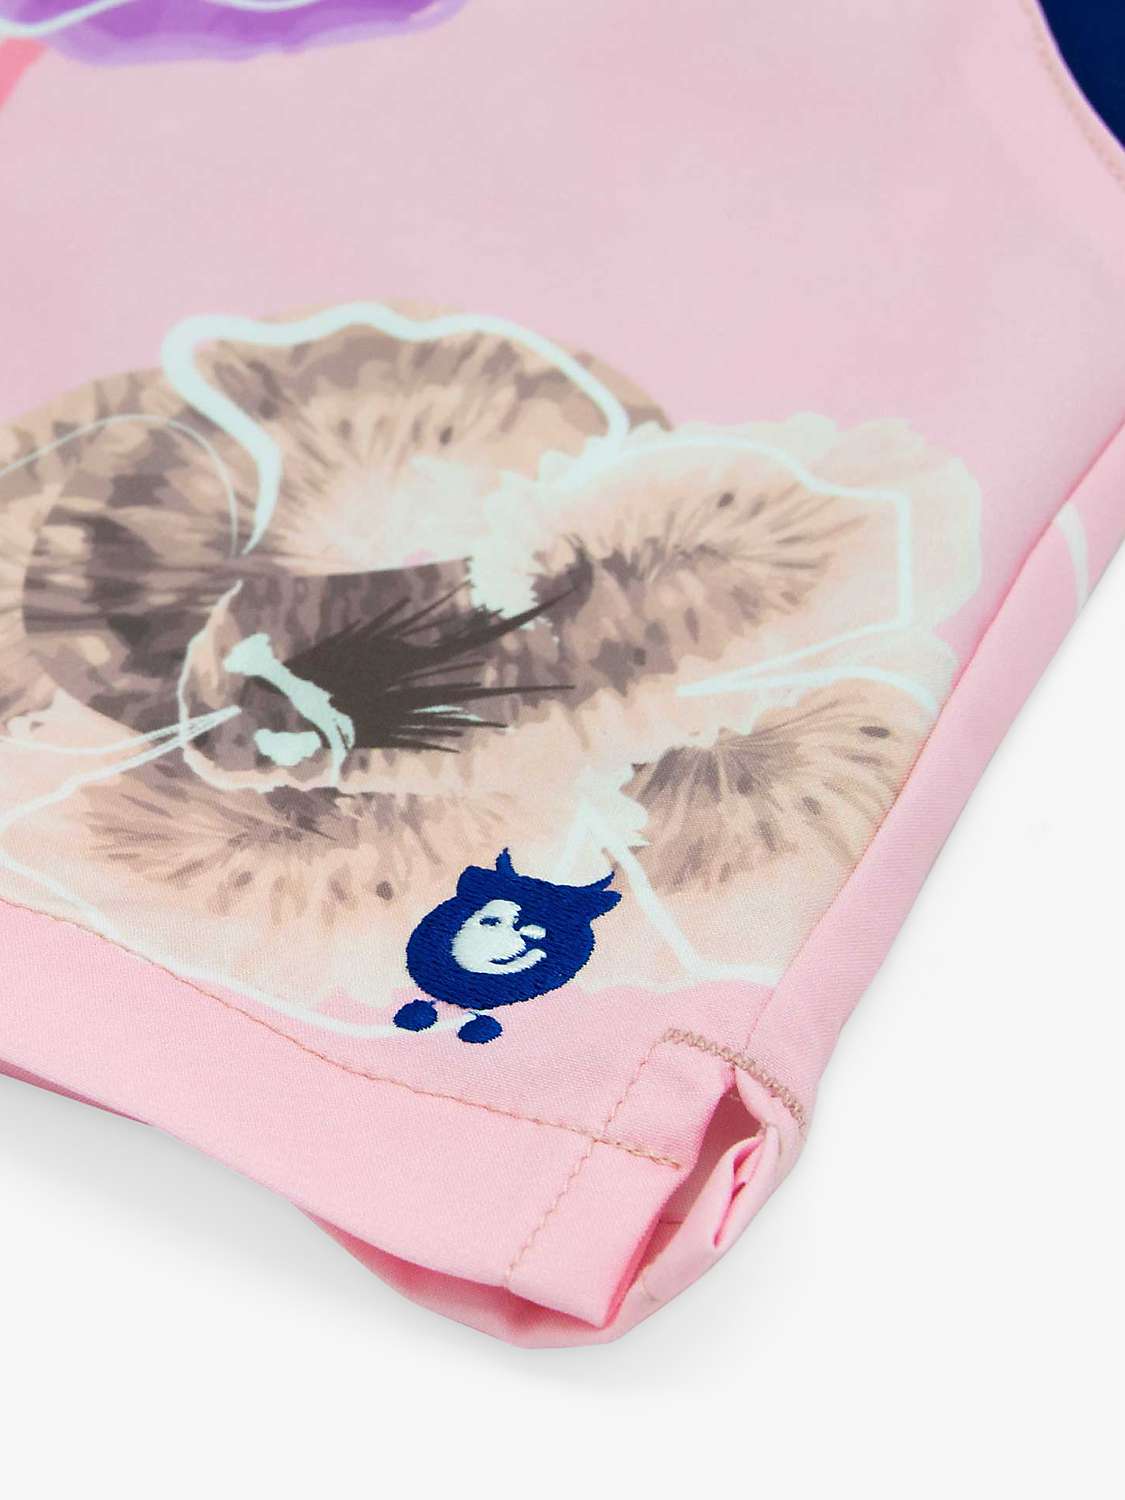 Buy Randy Cow Floral Print Swim Shorts, Pink/Multi Online at johnlewis.com